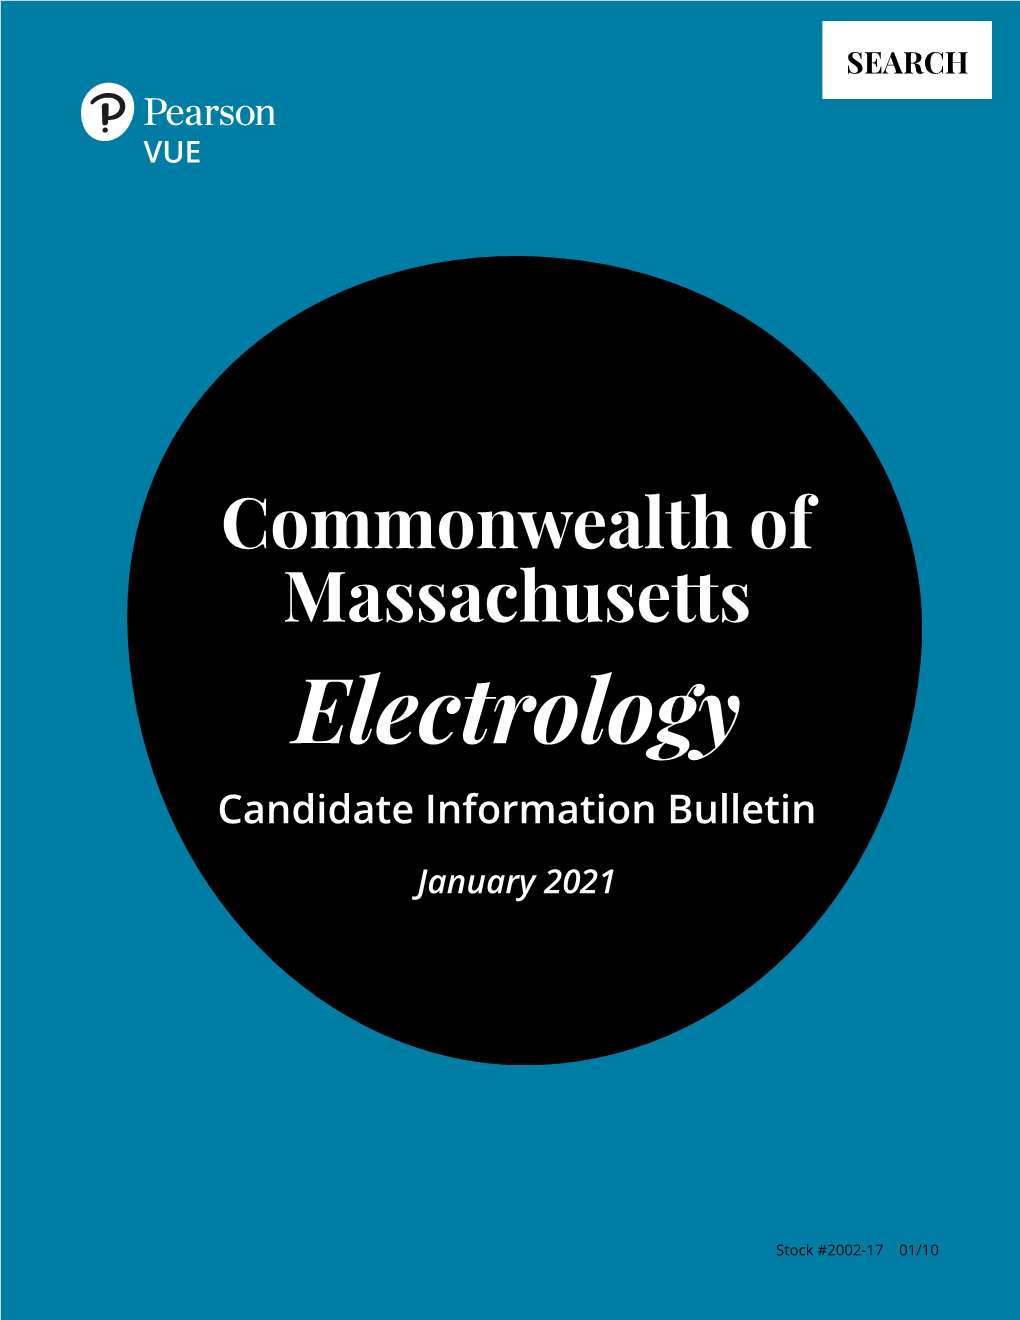 Electrology Candidate Information Bulletin